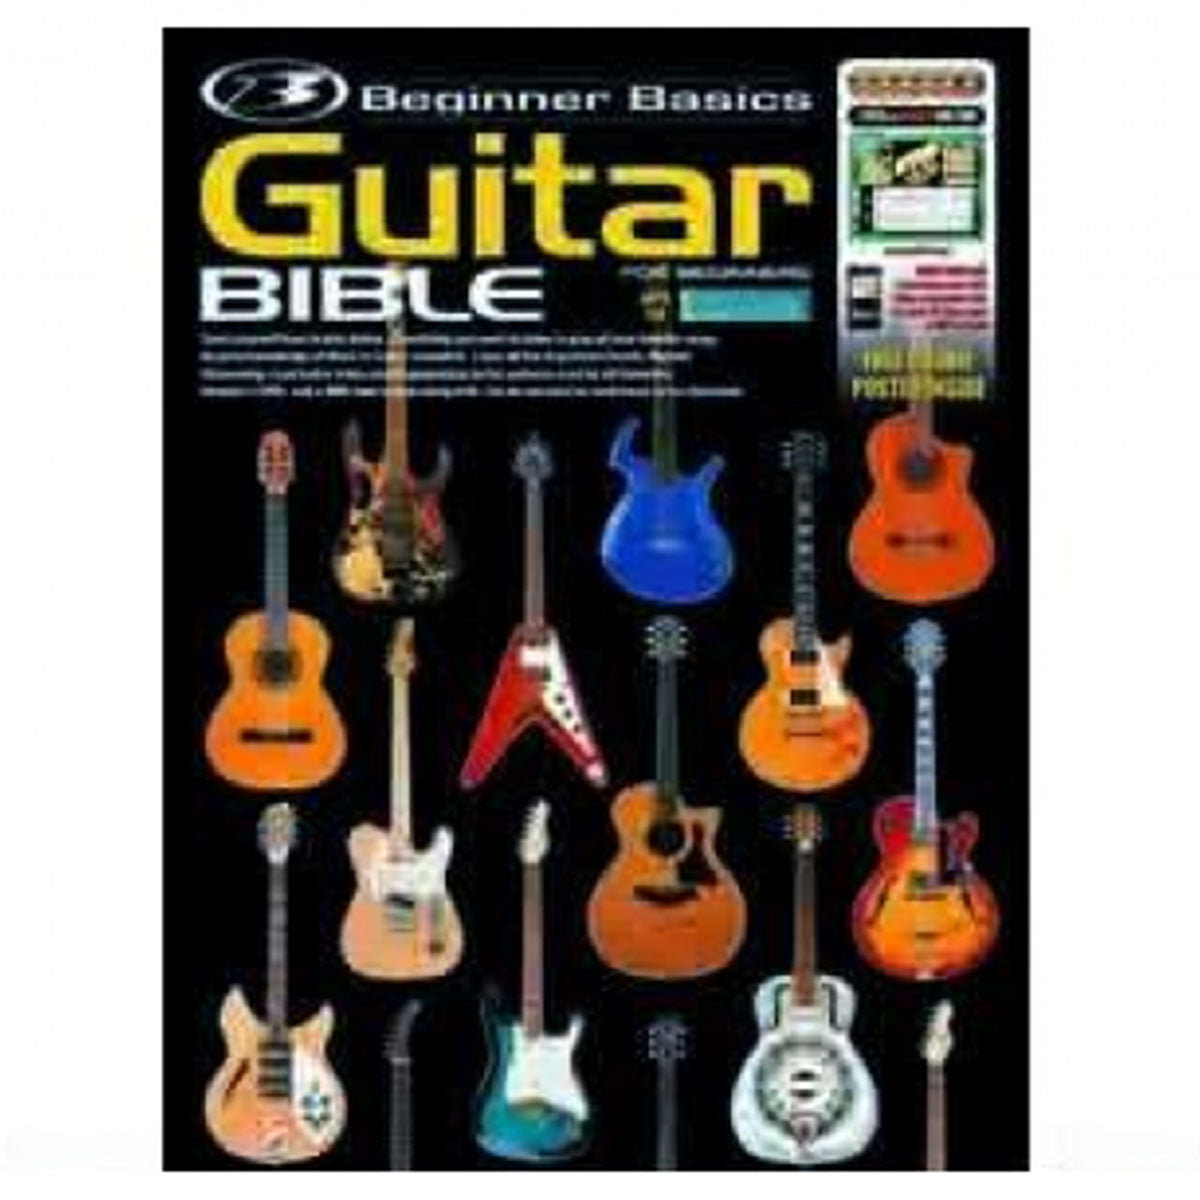 Progressive Books 11815 Beginner Basics Guitar Bible Free DVDs & CD KPBBGB